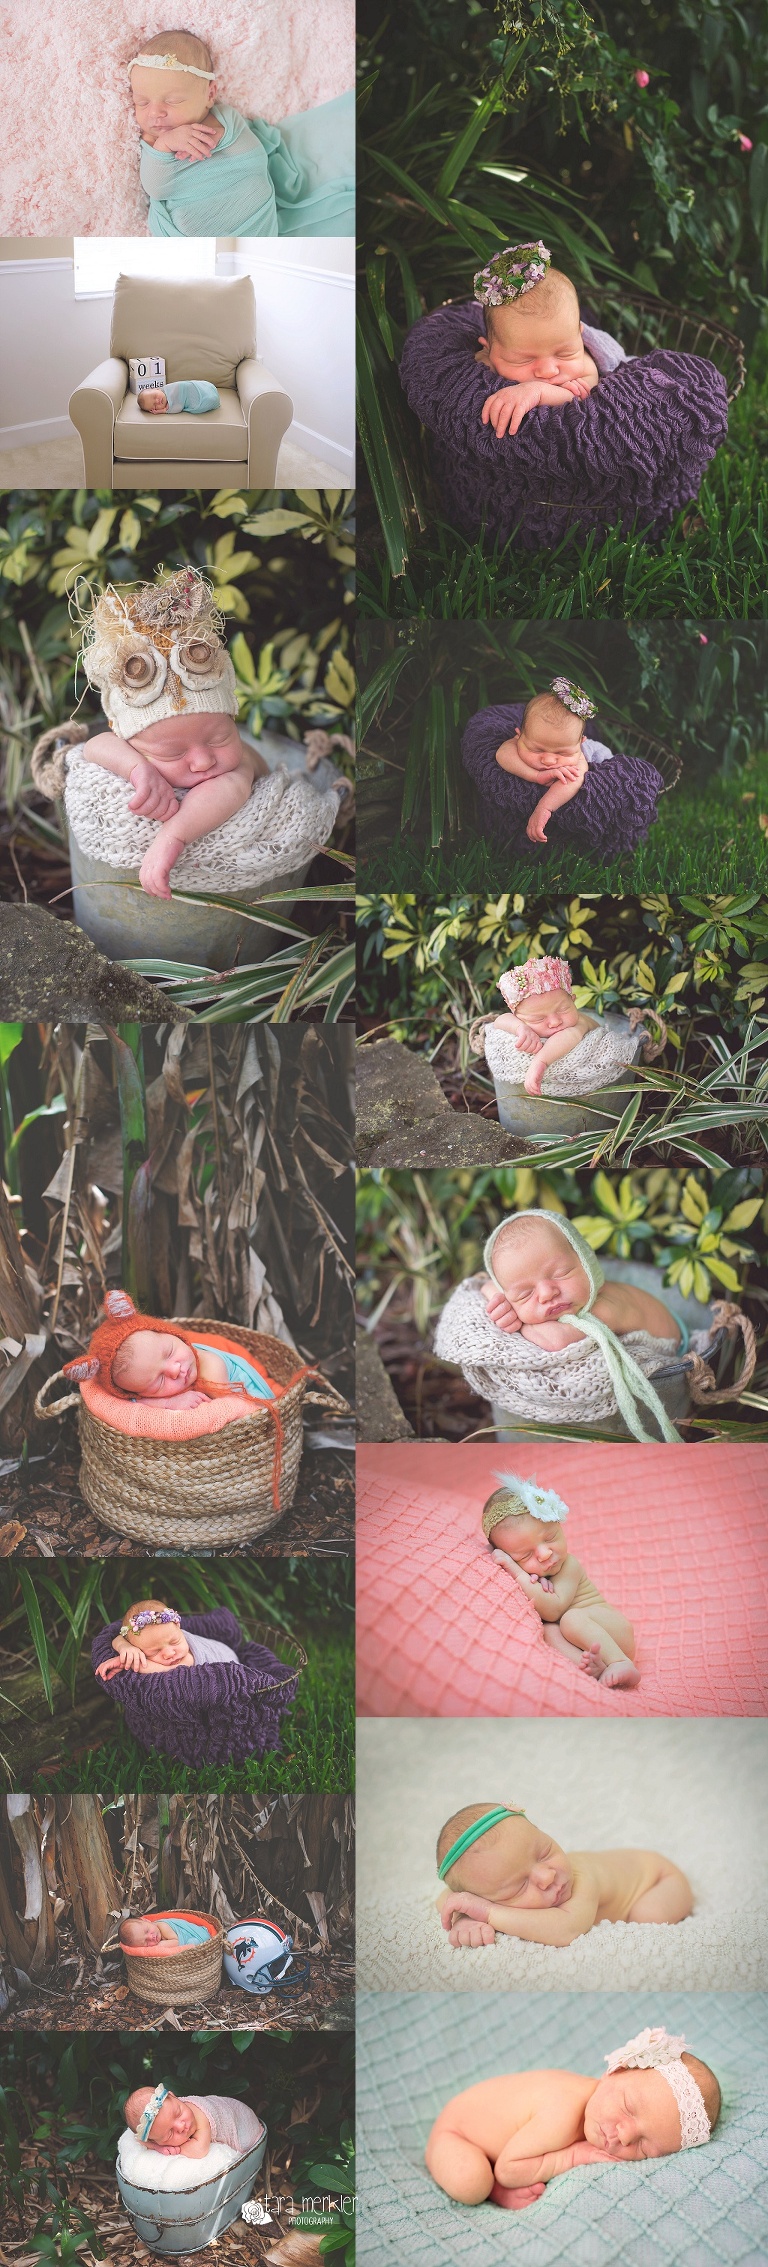 Tara Merkler Photography Orlando, Florida Newborn Photography April 2014_0006.jpg